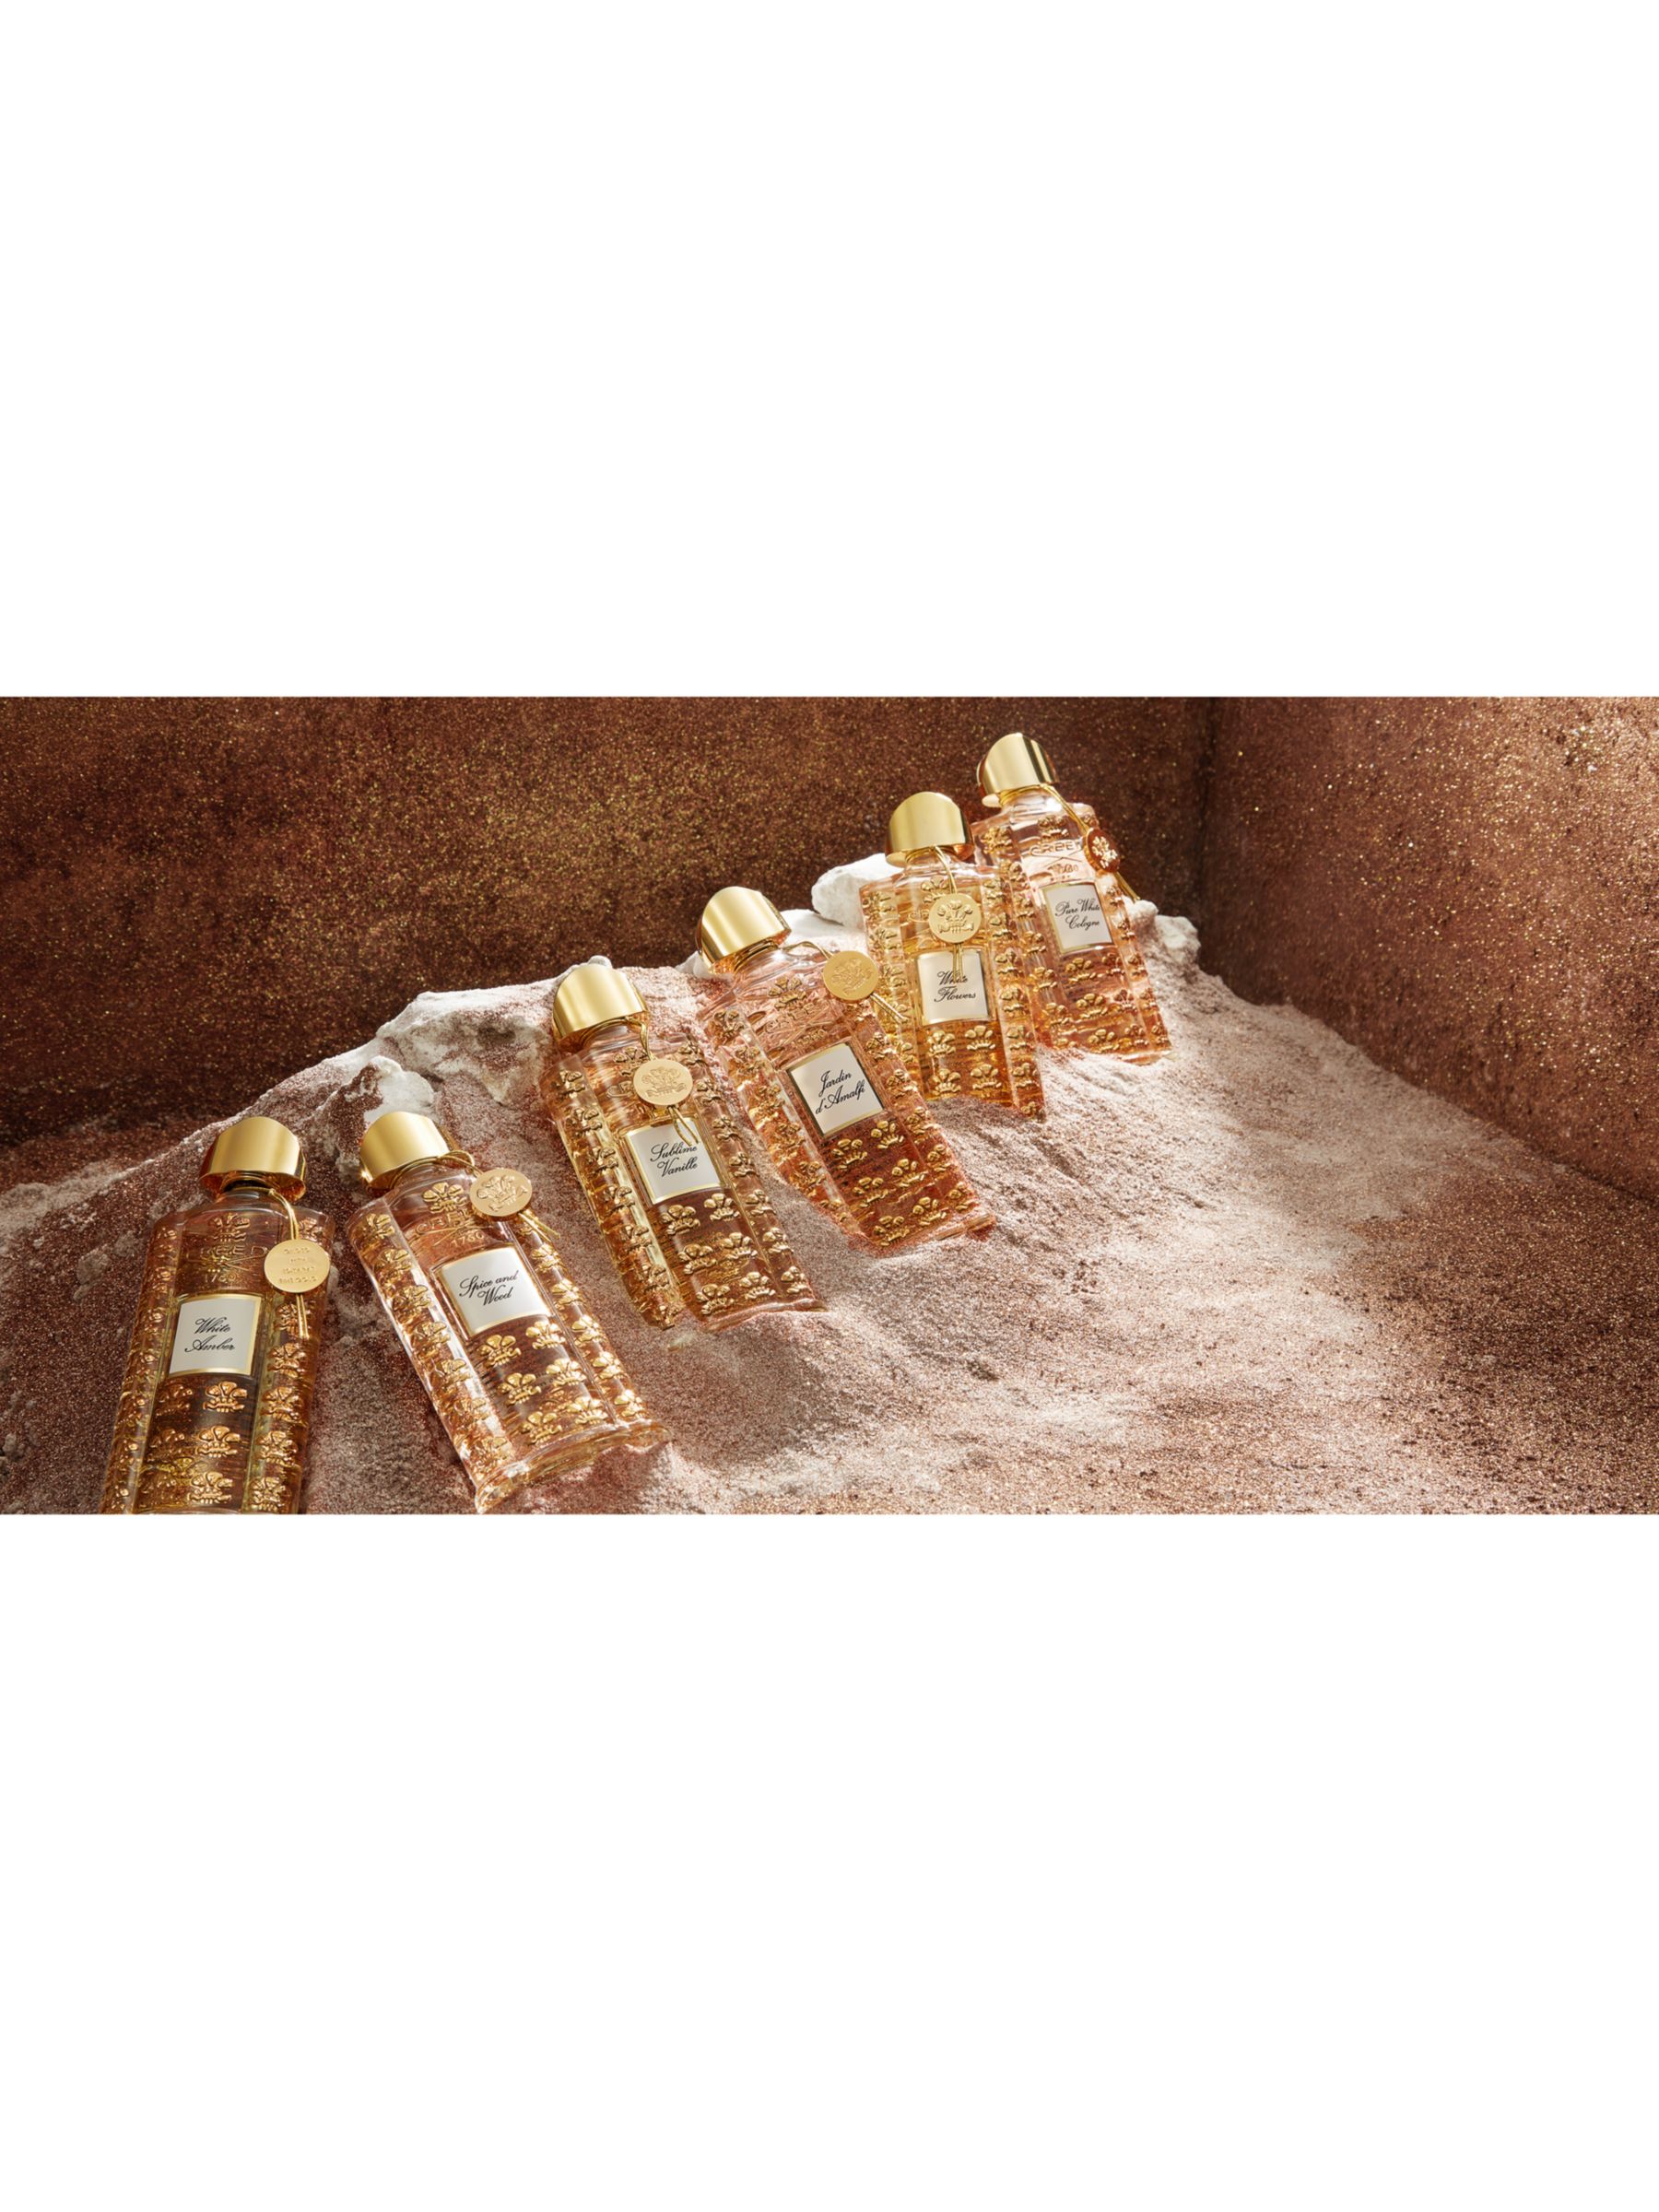 CREED Royal Exclusives White Amber Eau de Parfum, 75ml 4